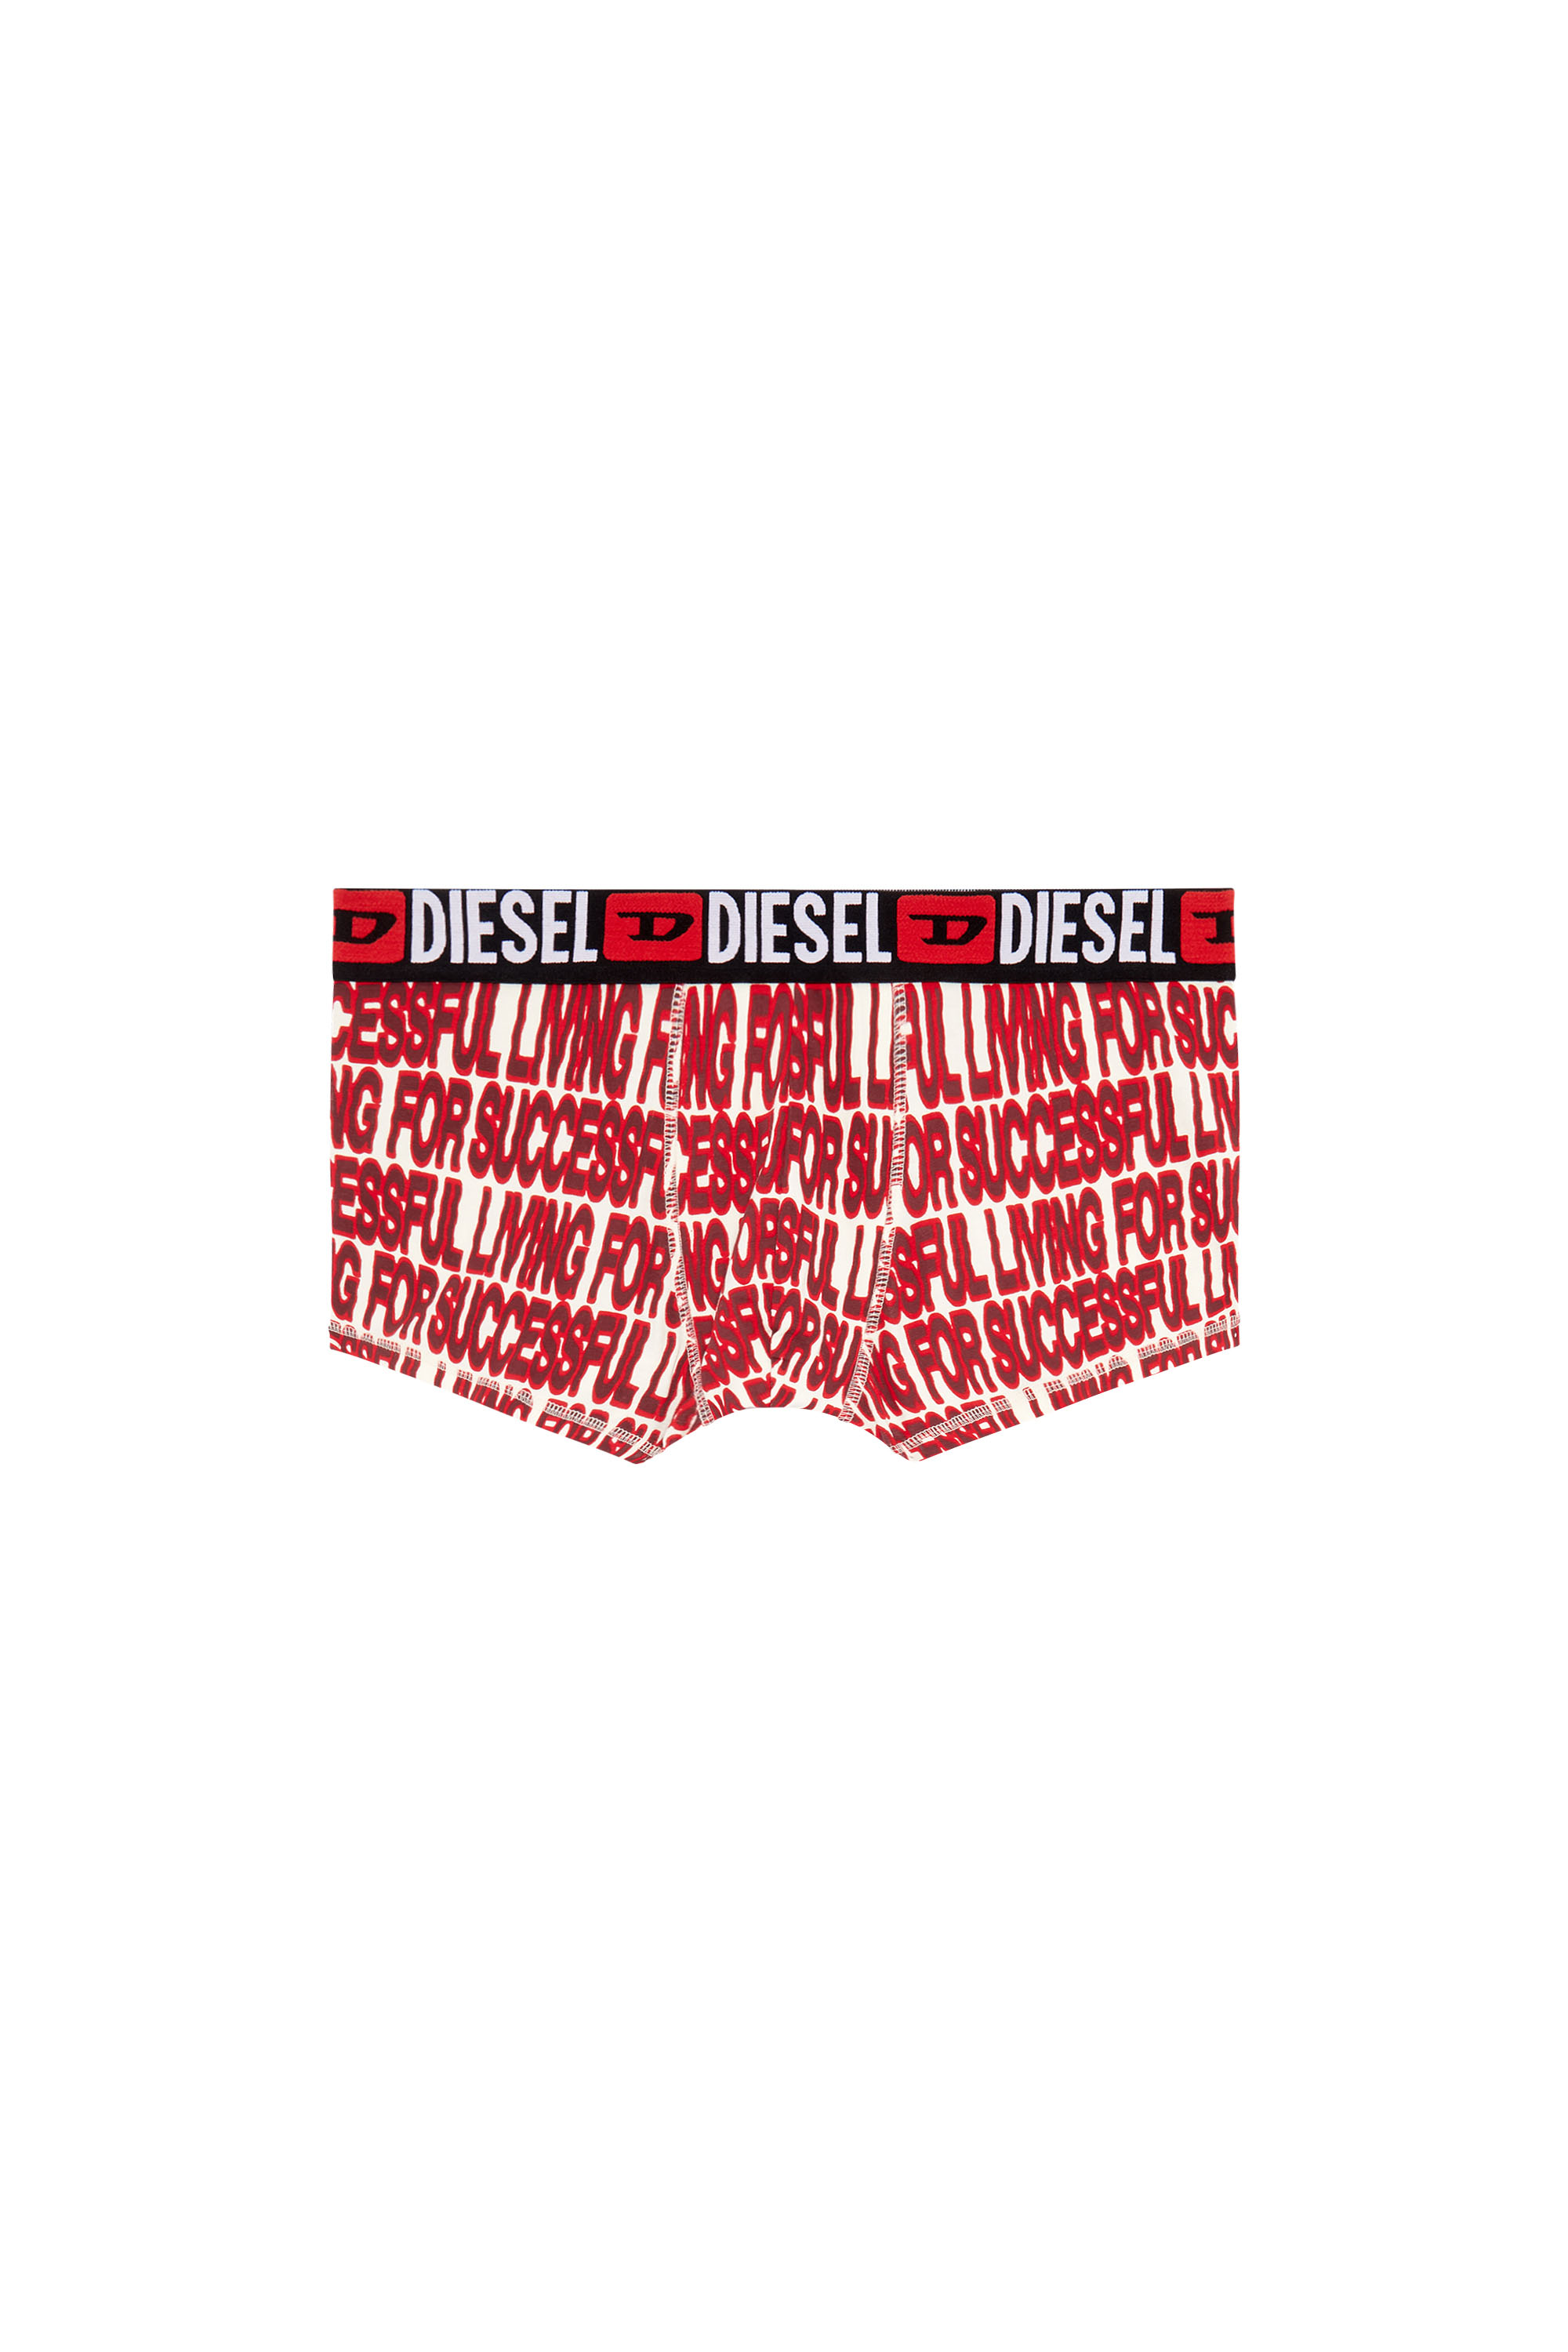 Diesel - UMBX-DAMIEN, Red/White - Image 1